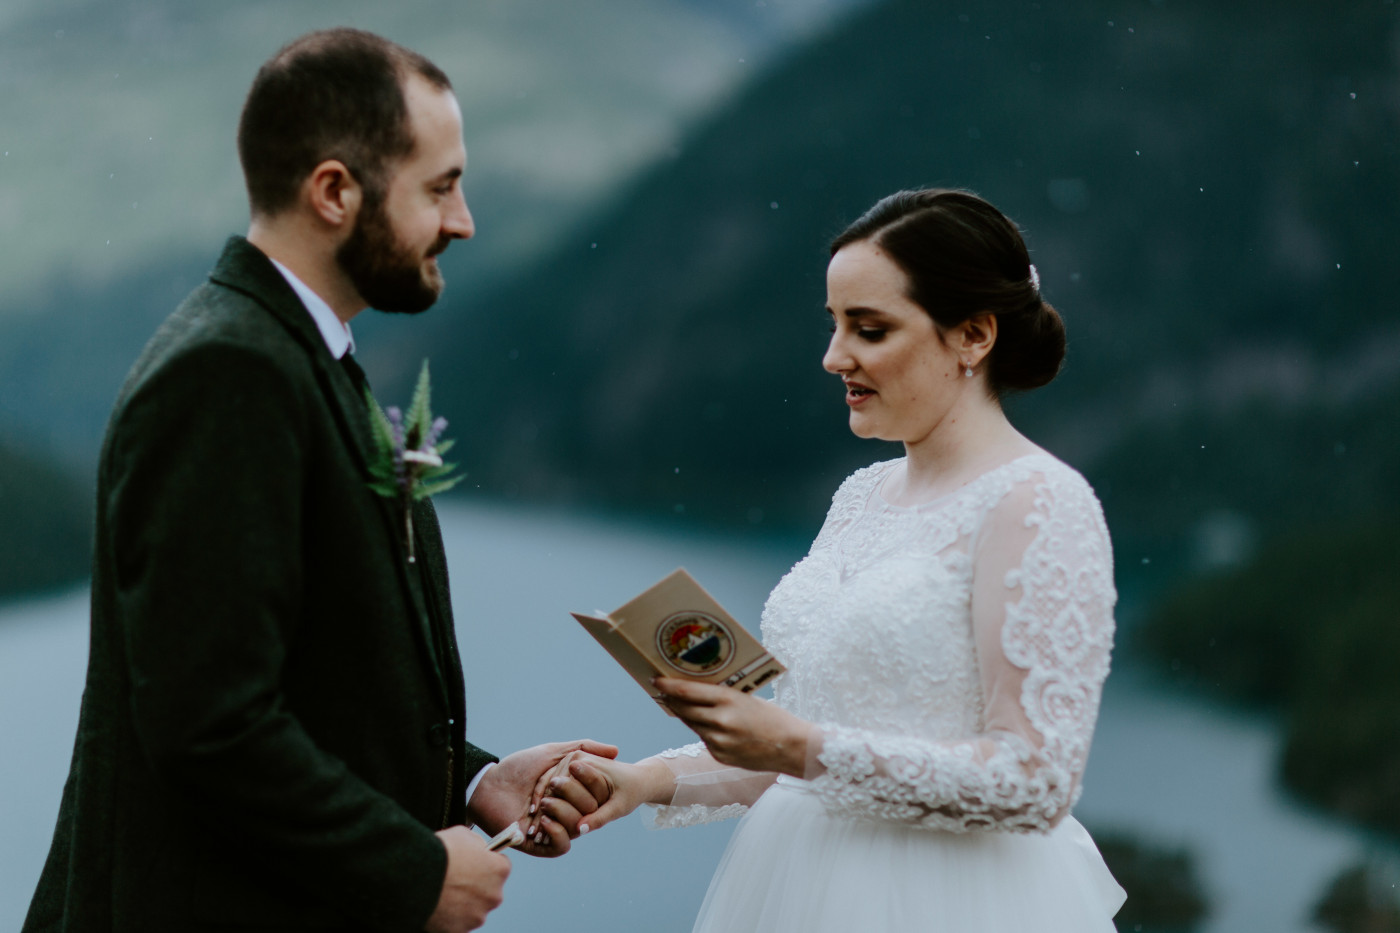 Elizabeth recites her vows at Diablo Lake Overlook. Elopement photography at North Cascades National Park by Sienna Plus Josh.